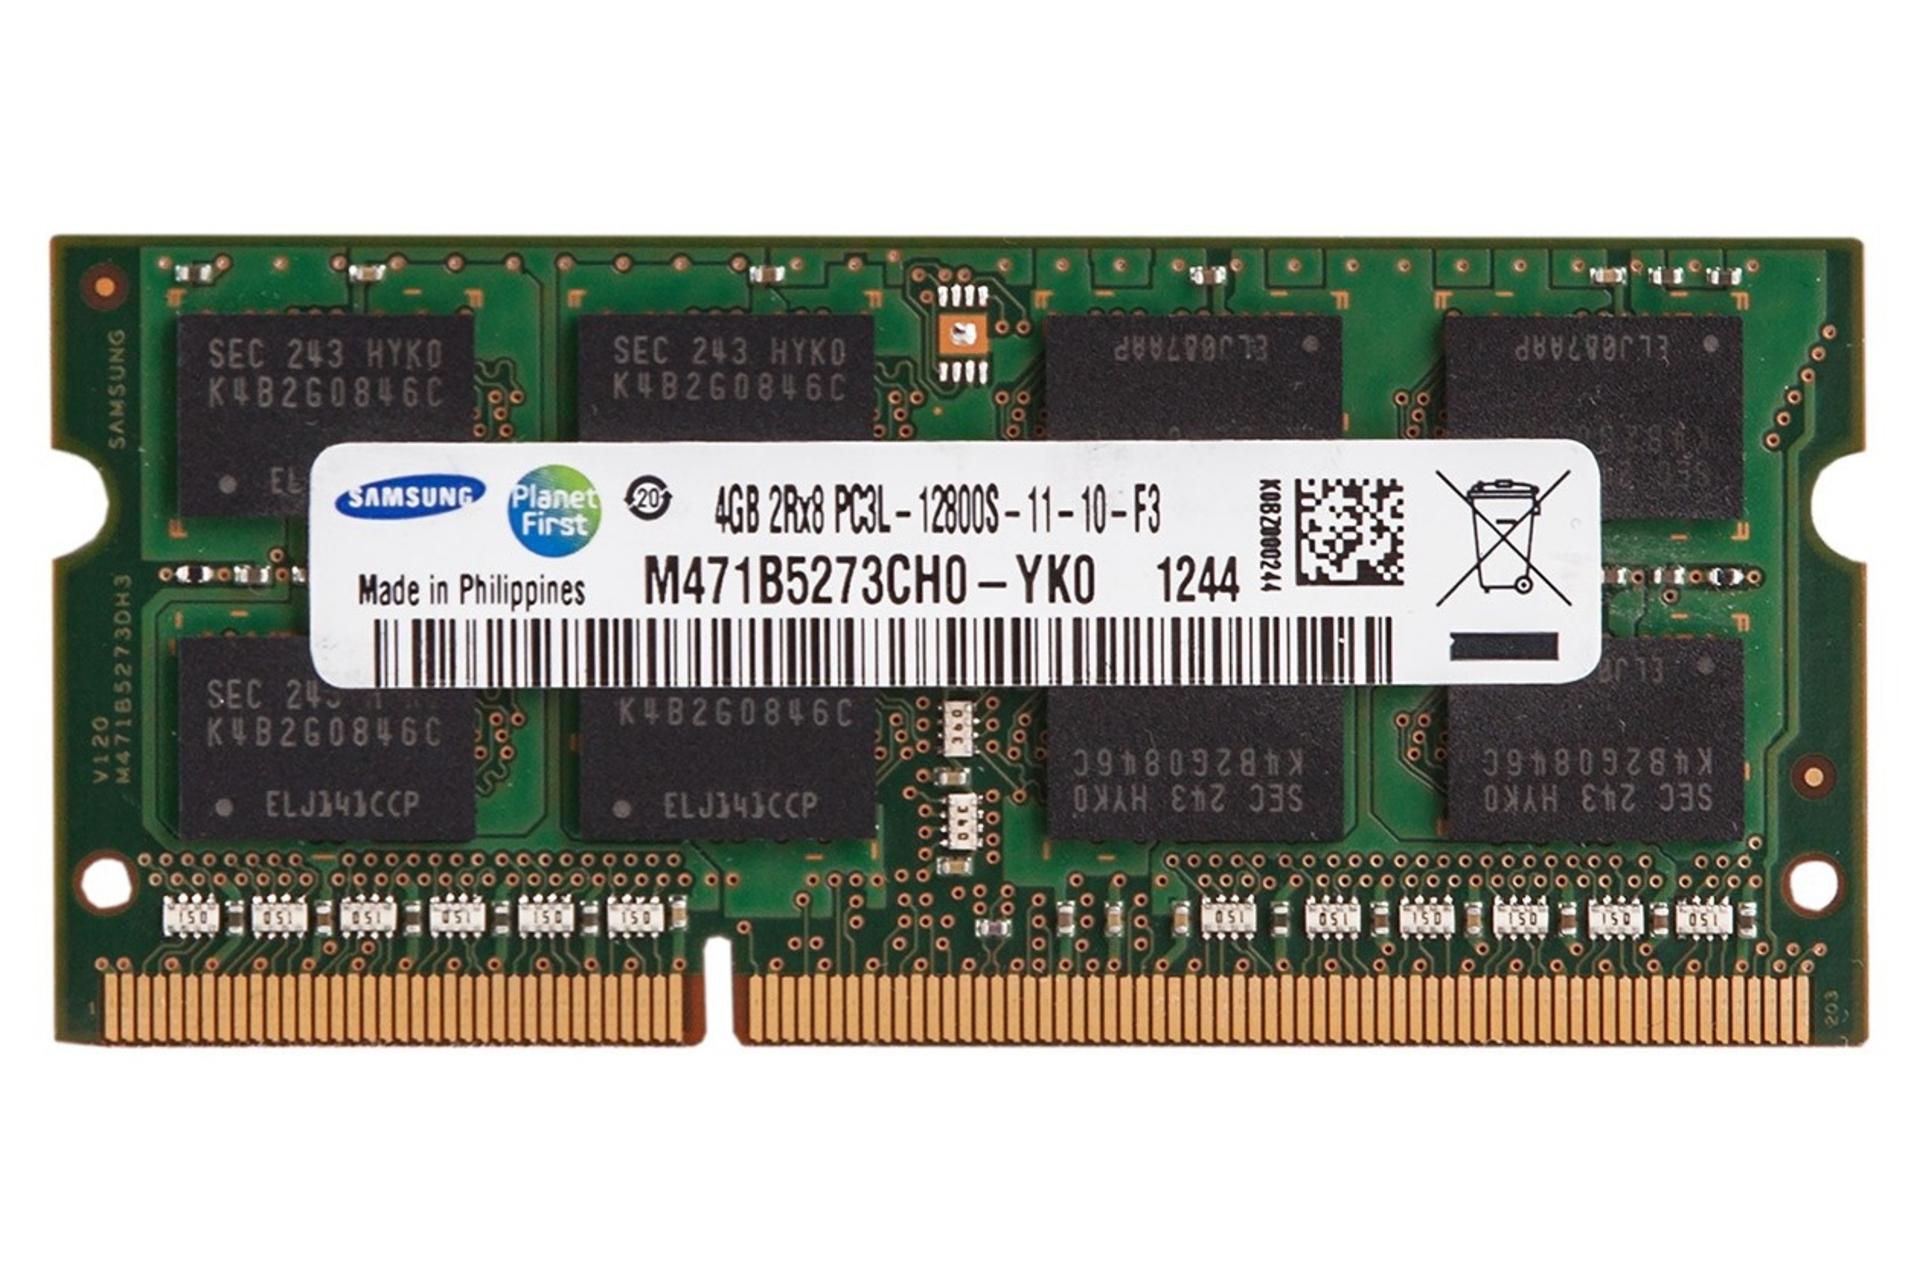 حافظه رم سامسونگ M471B5273CH0-YK0 ظرفیت 4 گیگابایت Samsung M471B5273CH0-YK0 4GB DDR3L-1600 CL11